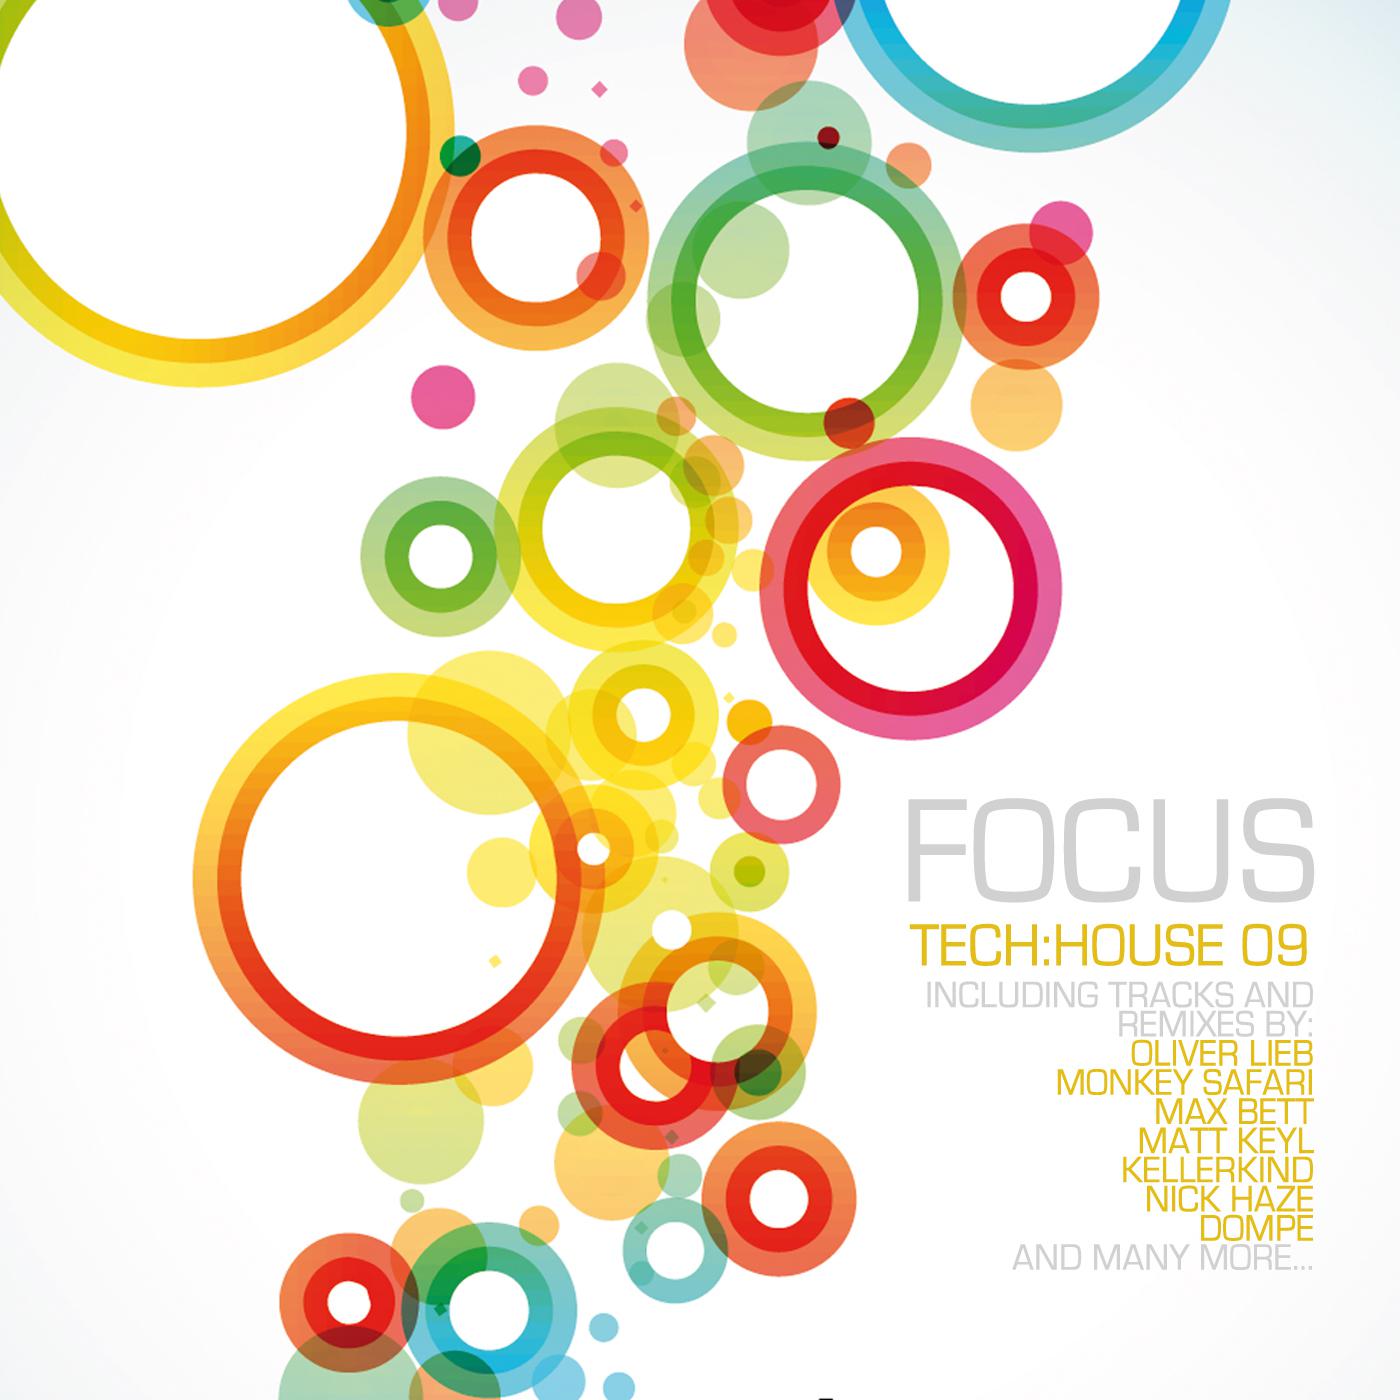 Focus Tech:House 09